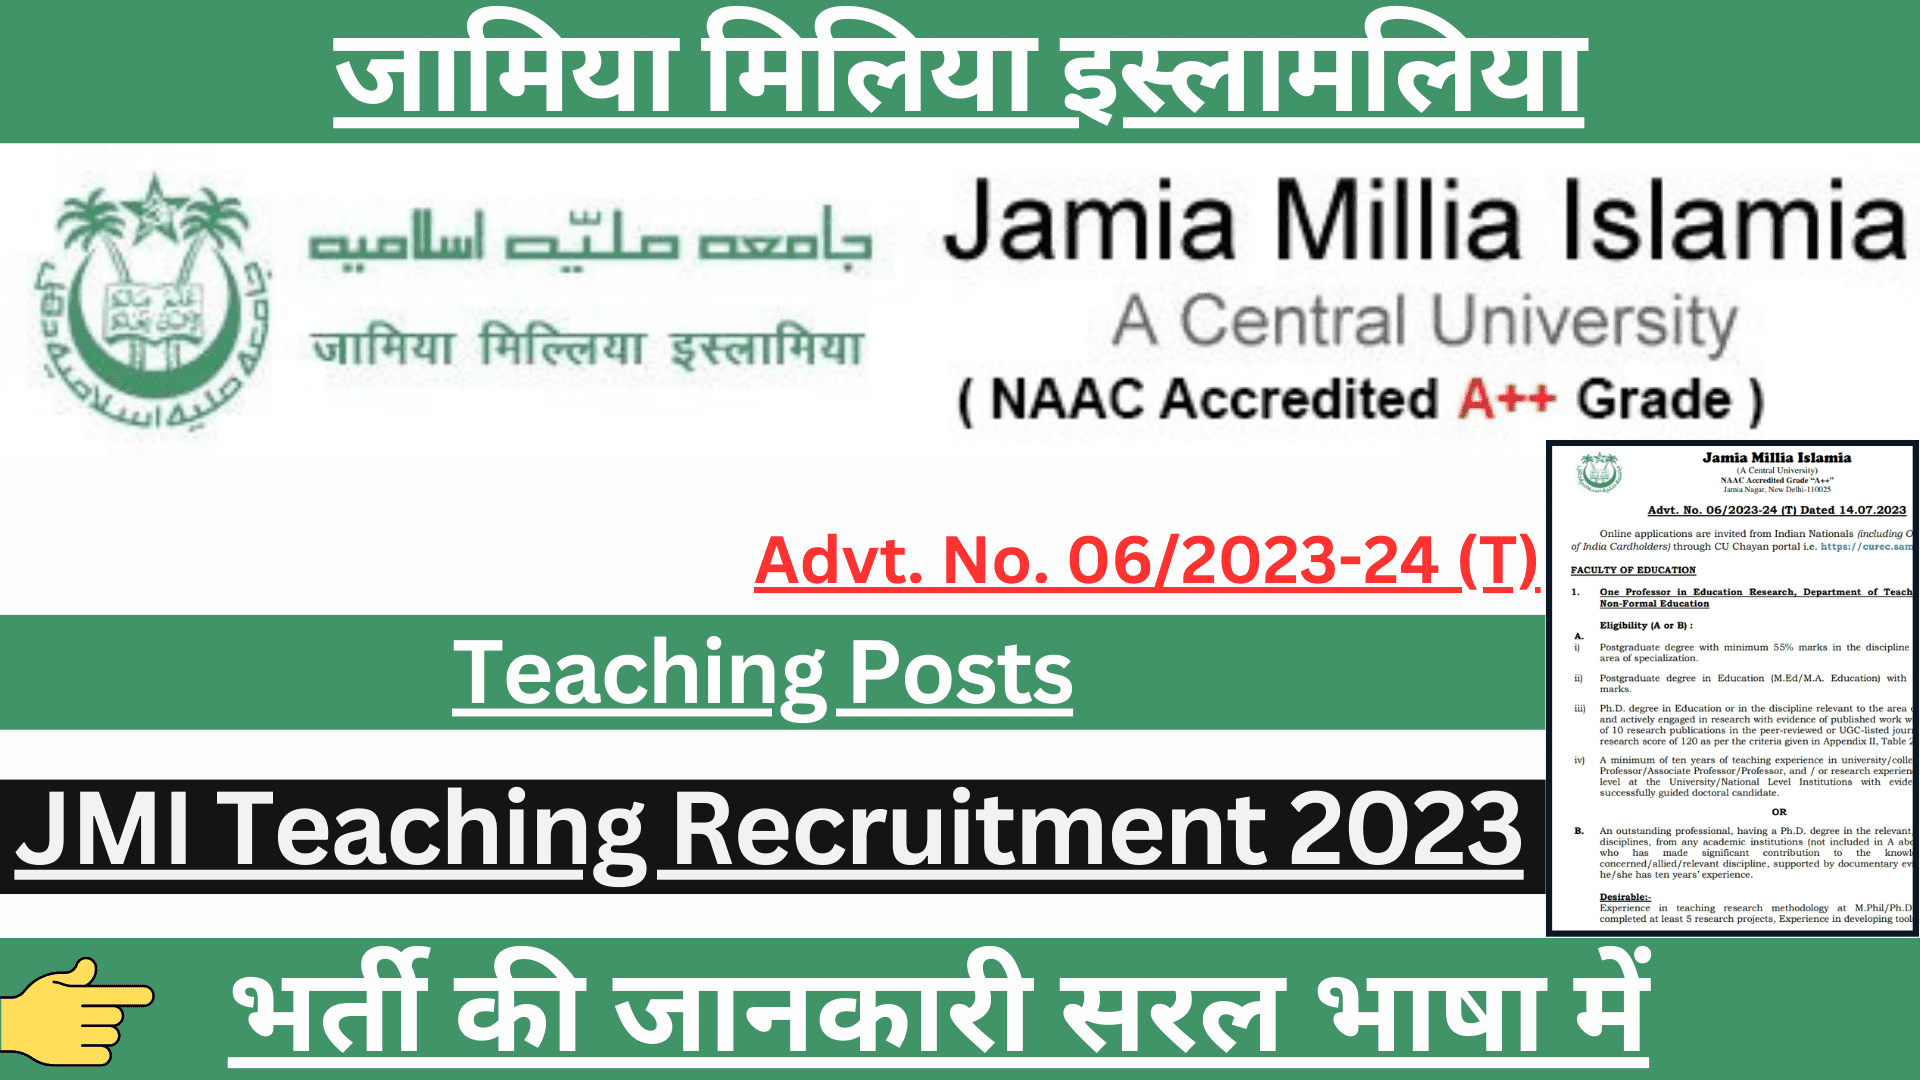 JMI Professor Recruitment 2023